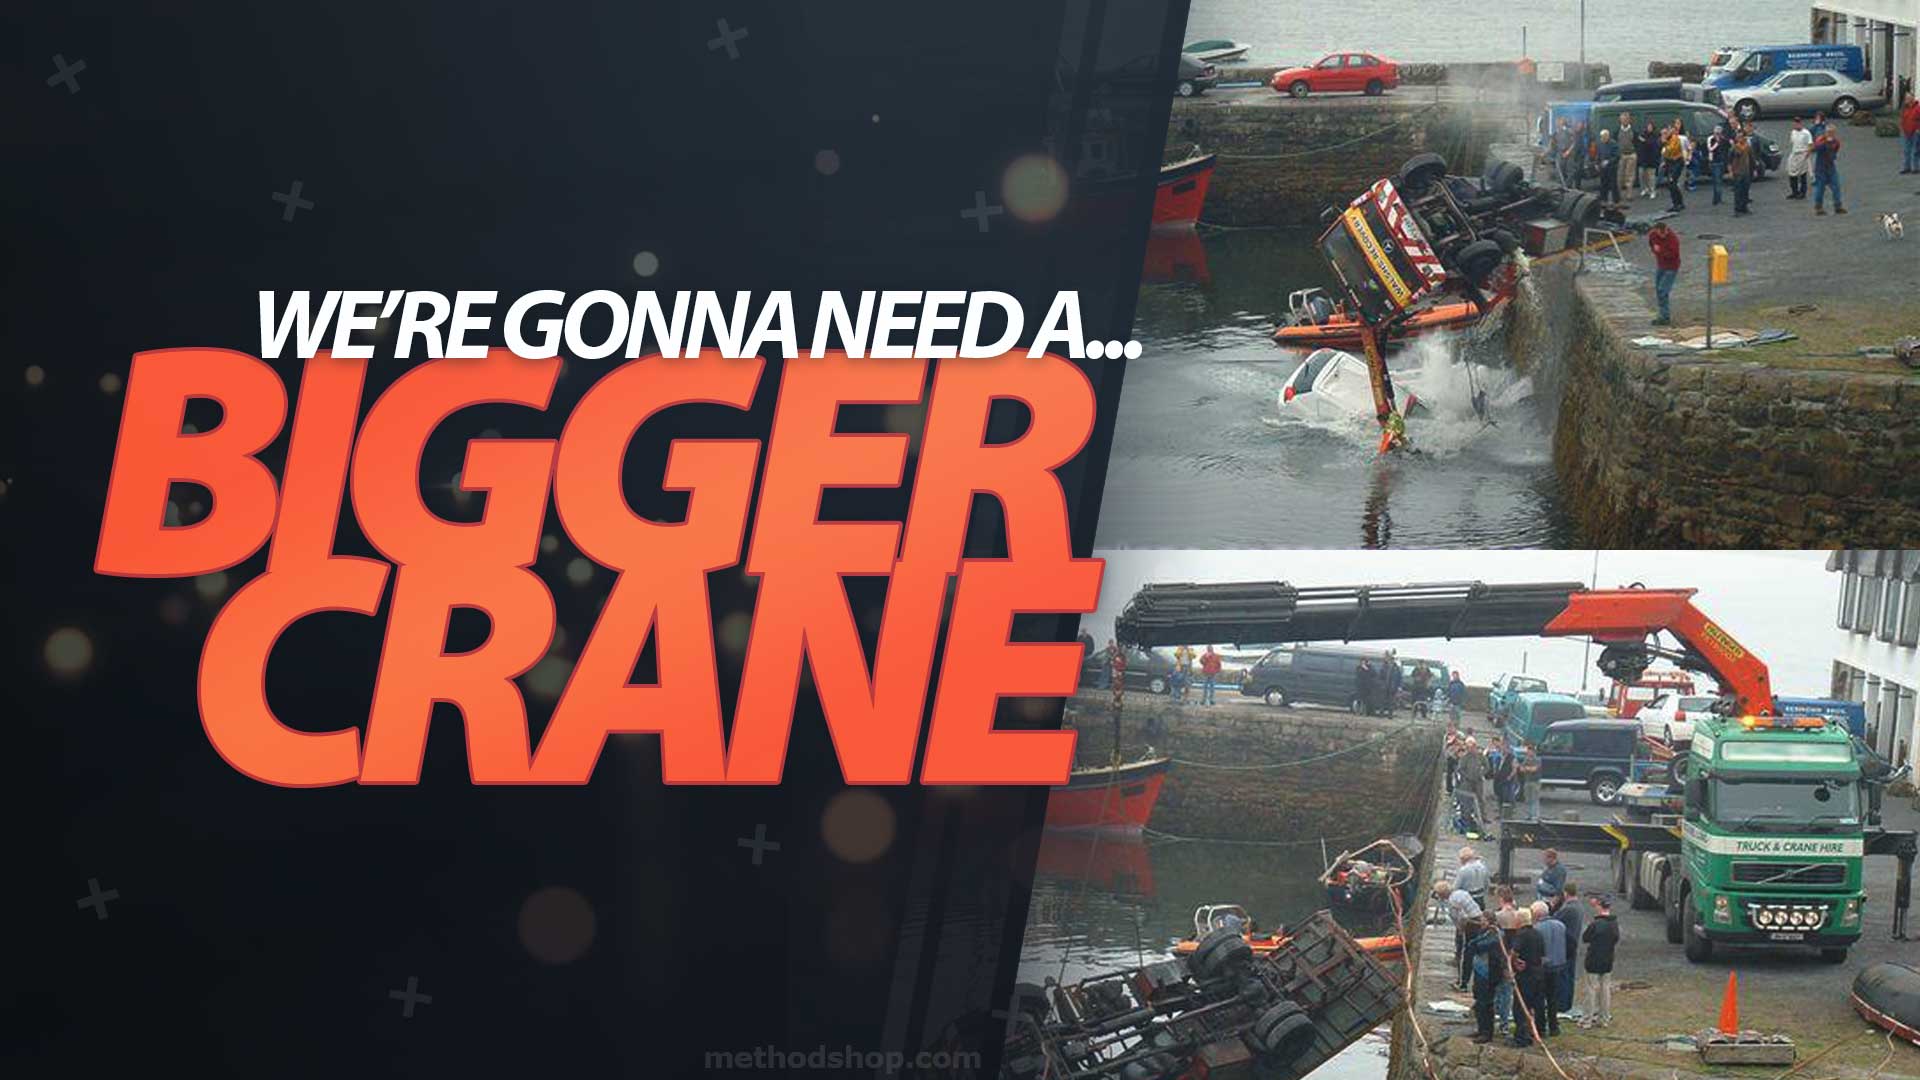 We're Going to Need a Bigger Crane - Irish Crane Accident Photos Go Viral